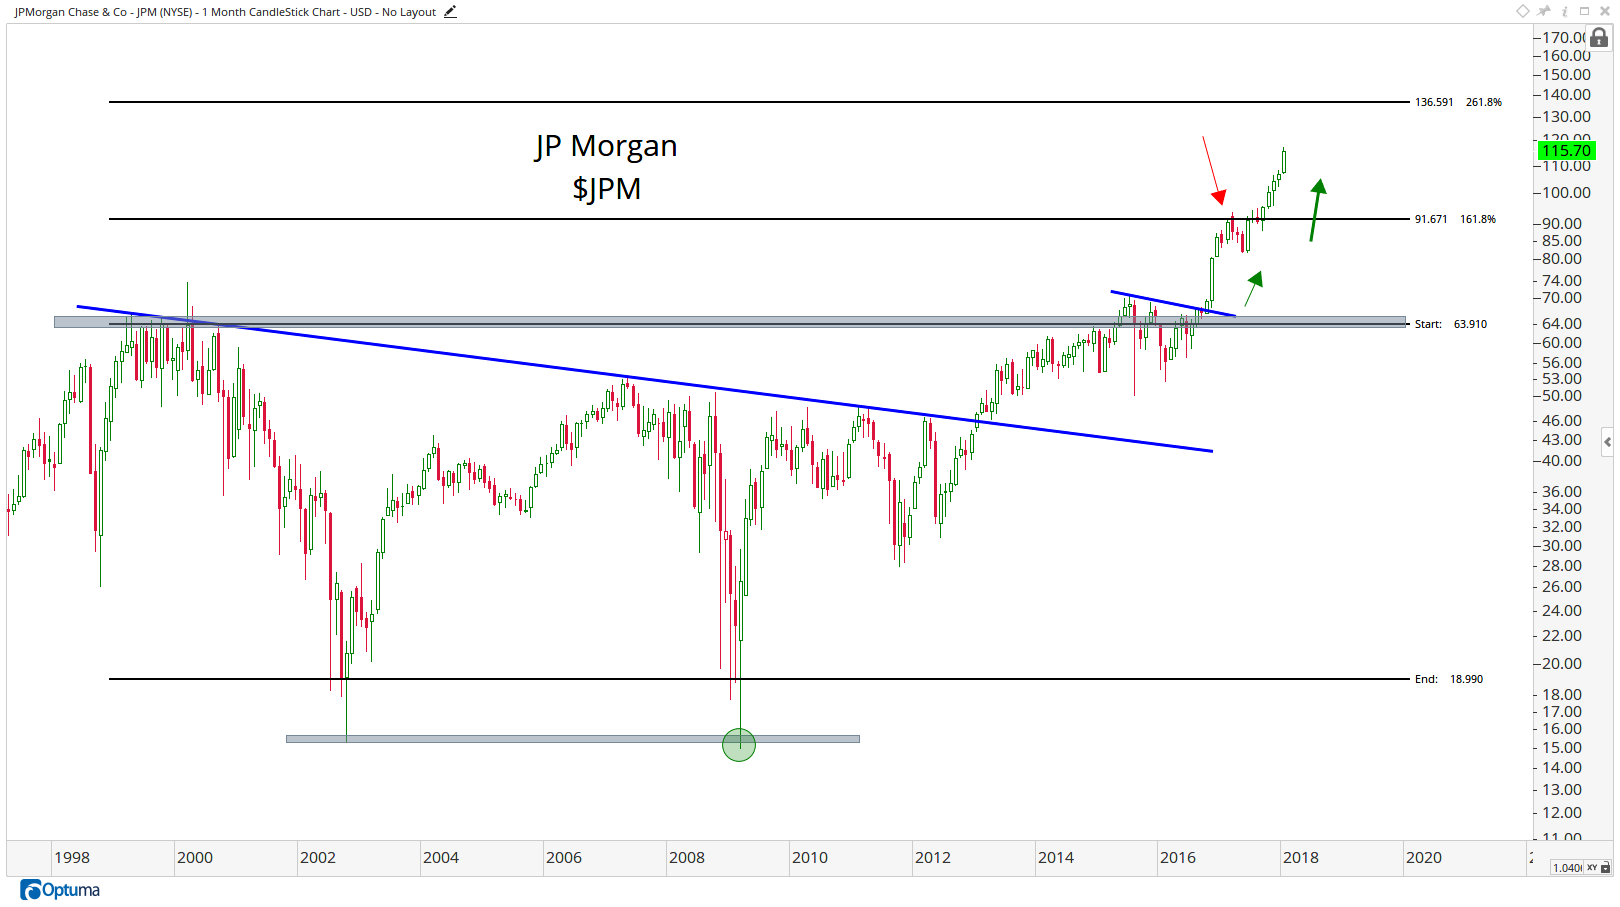 JPM - JPMorgan Chase & Co11